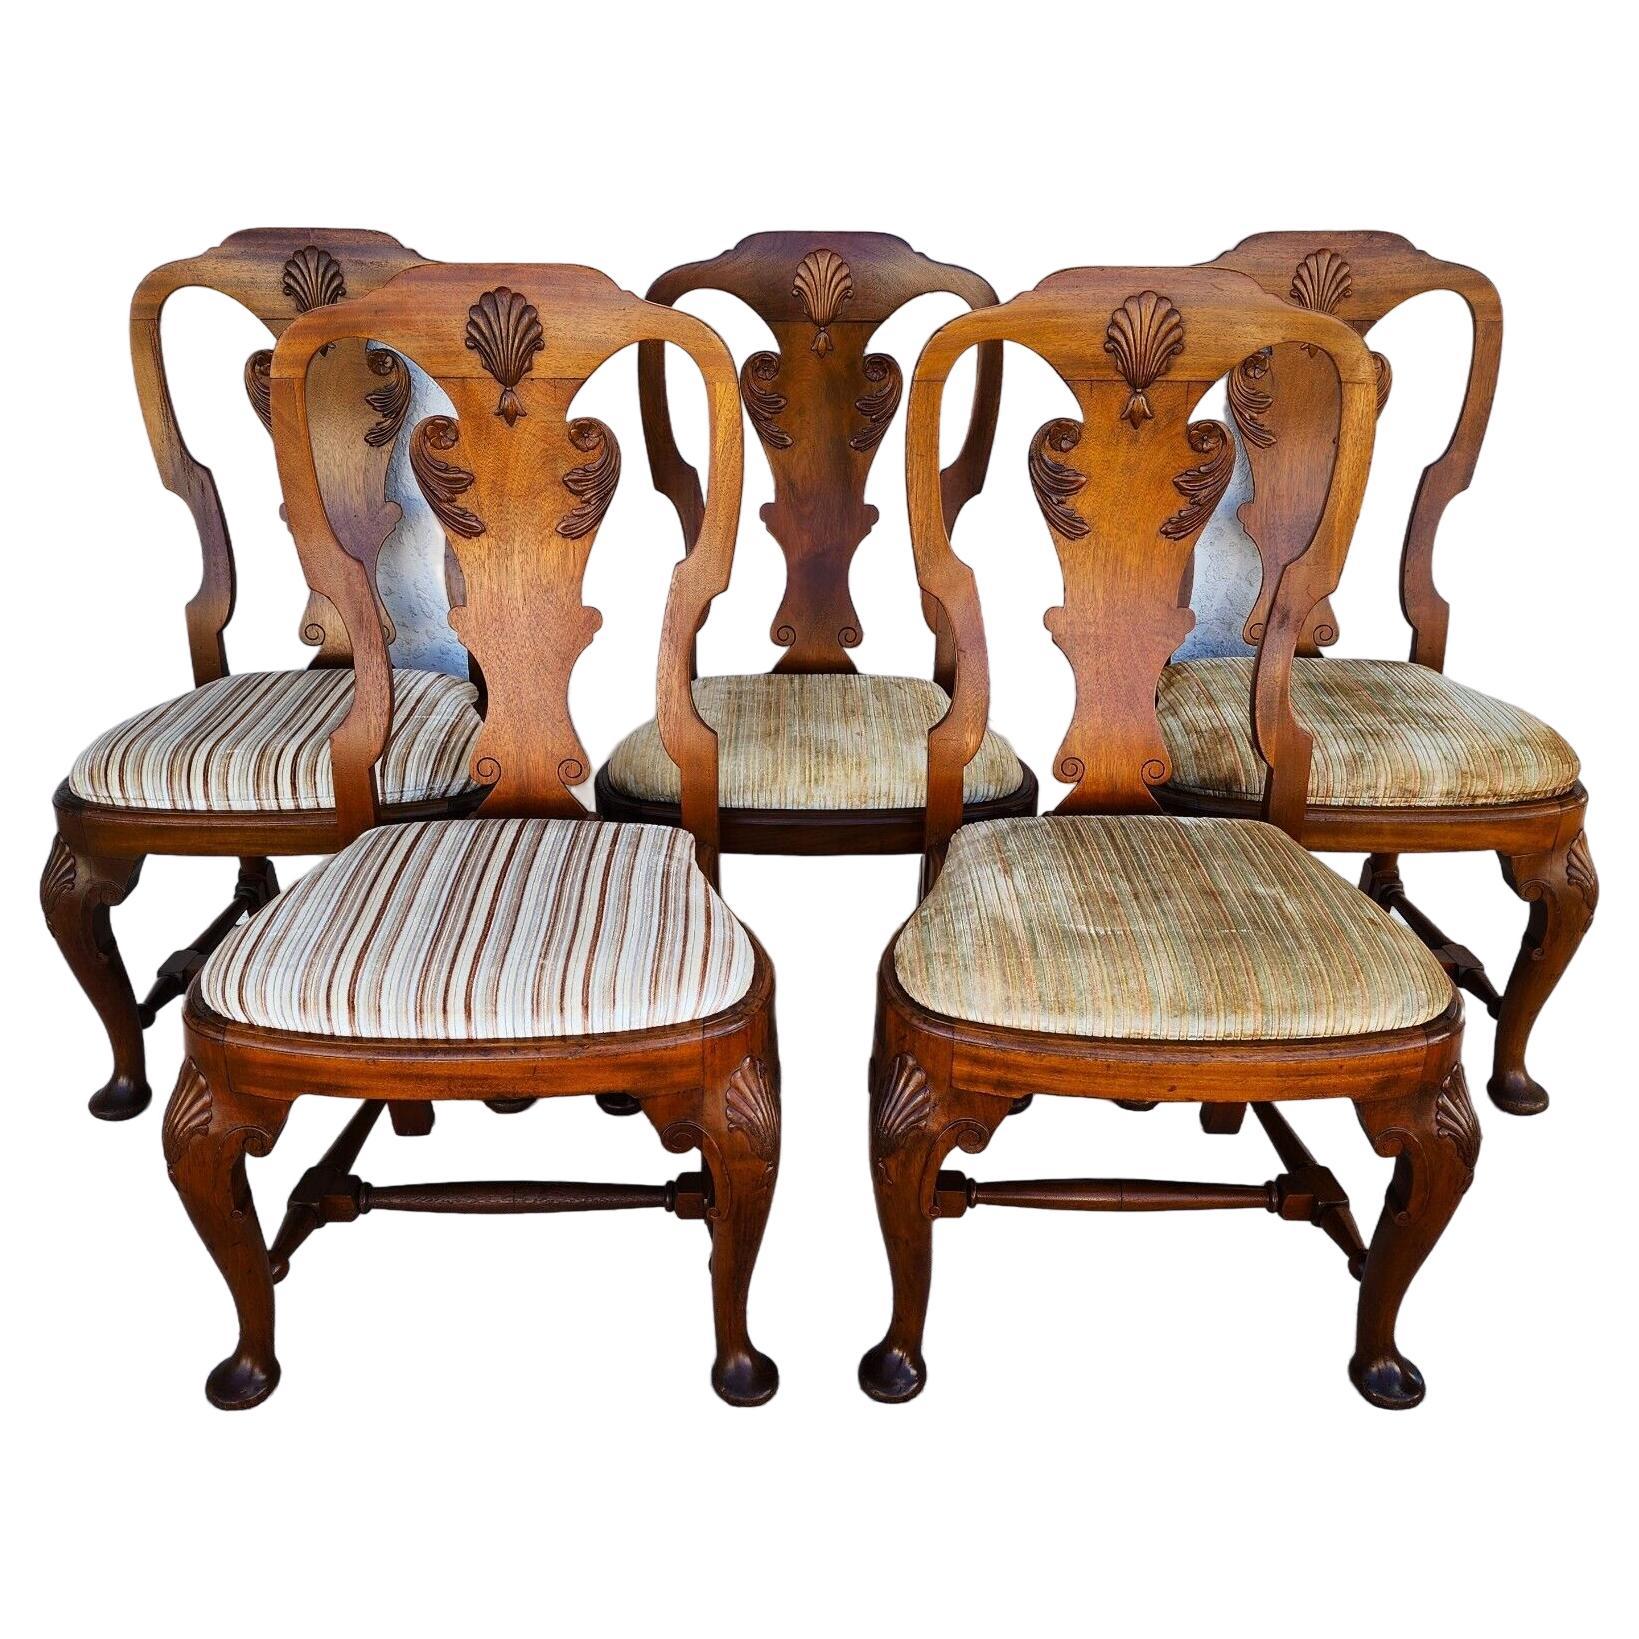 Antique Italian Georgian Dining Chairs Shell Walnut Set of 5